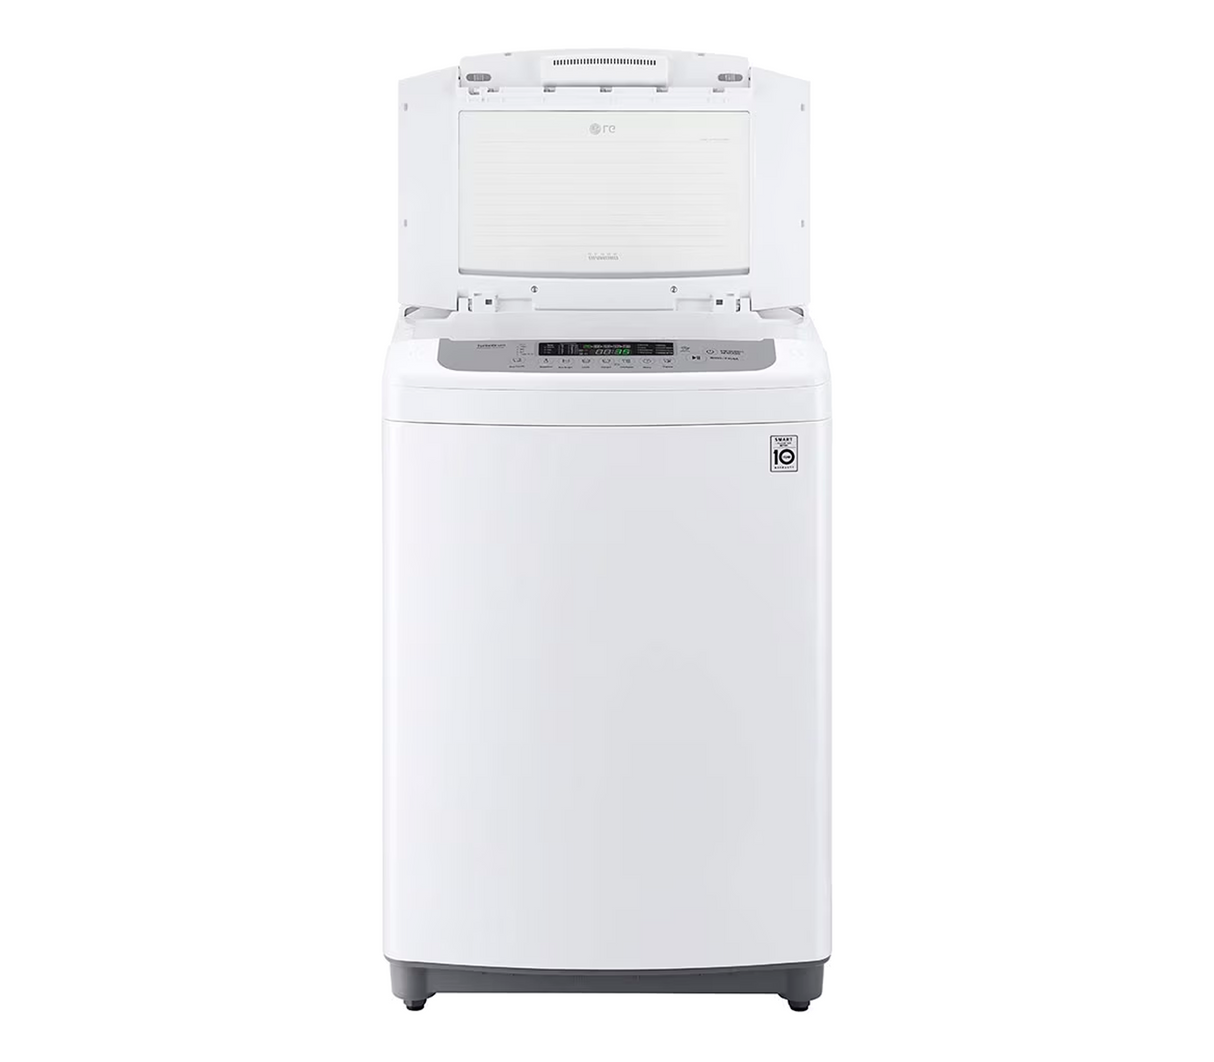 Lavadora automática inverter 15 kg blanca LG